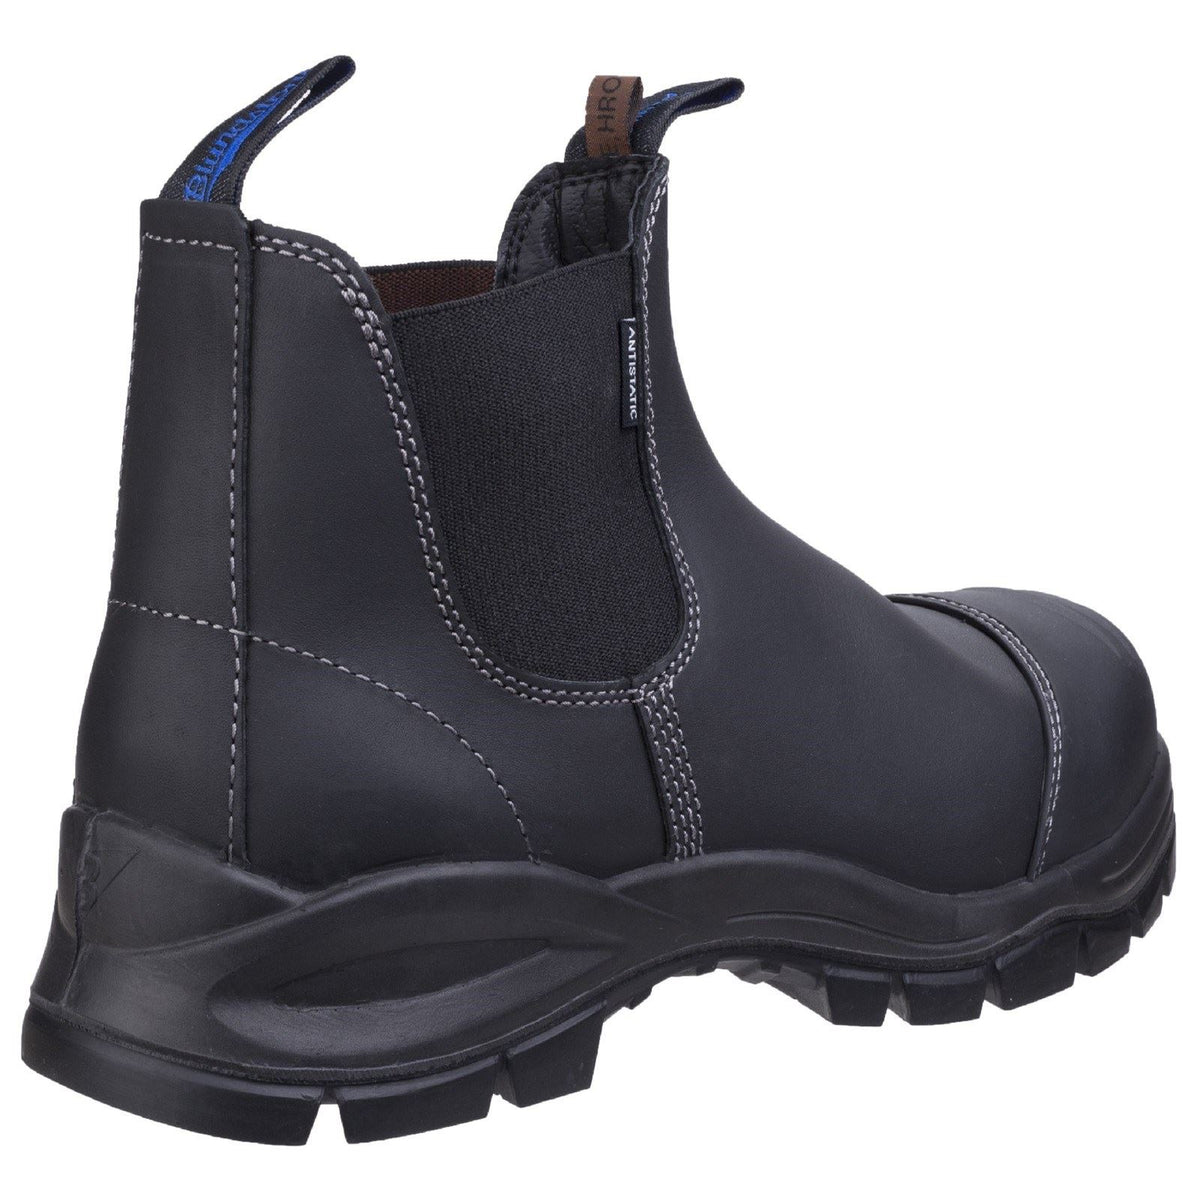 Blundstone 910 Dealer Safety Boots